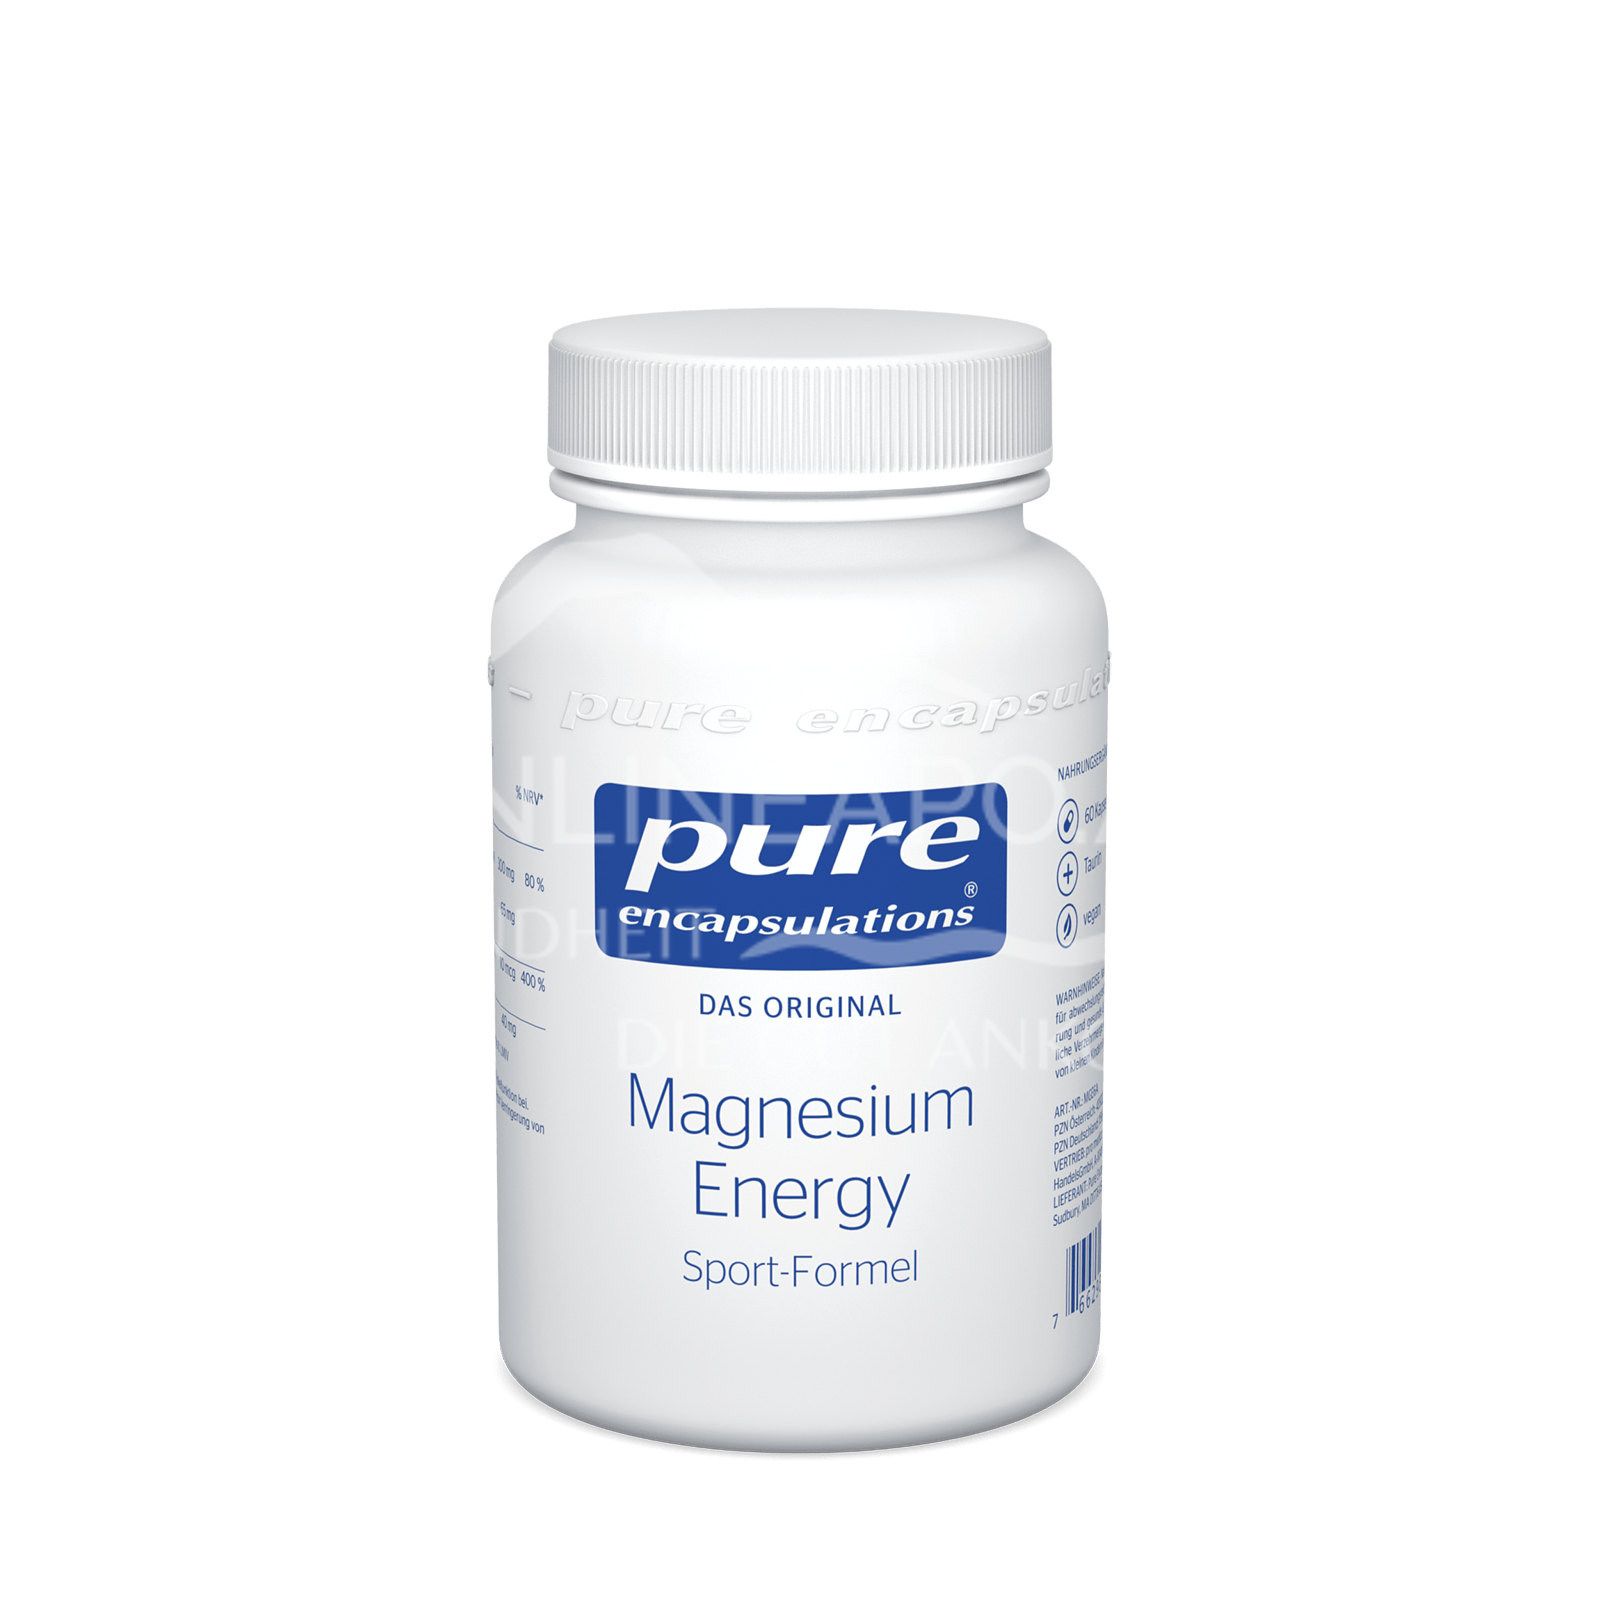 pure encapsulations® Magnesium Energy